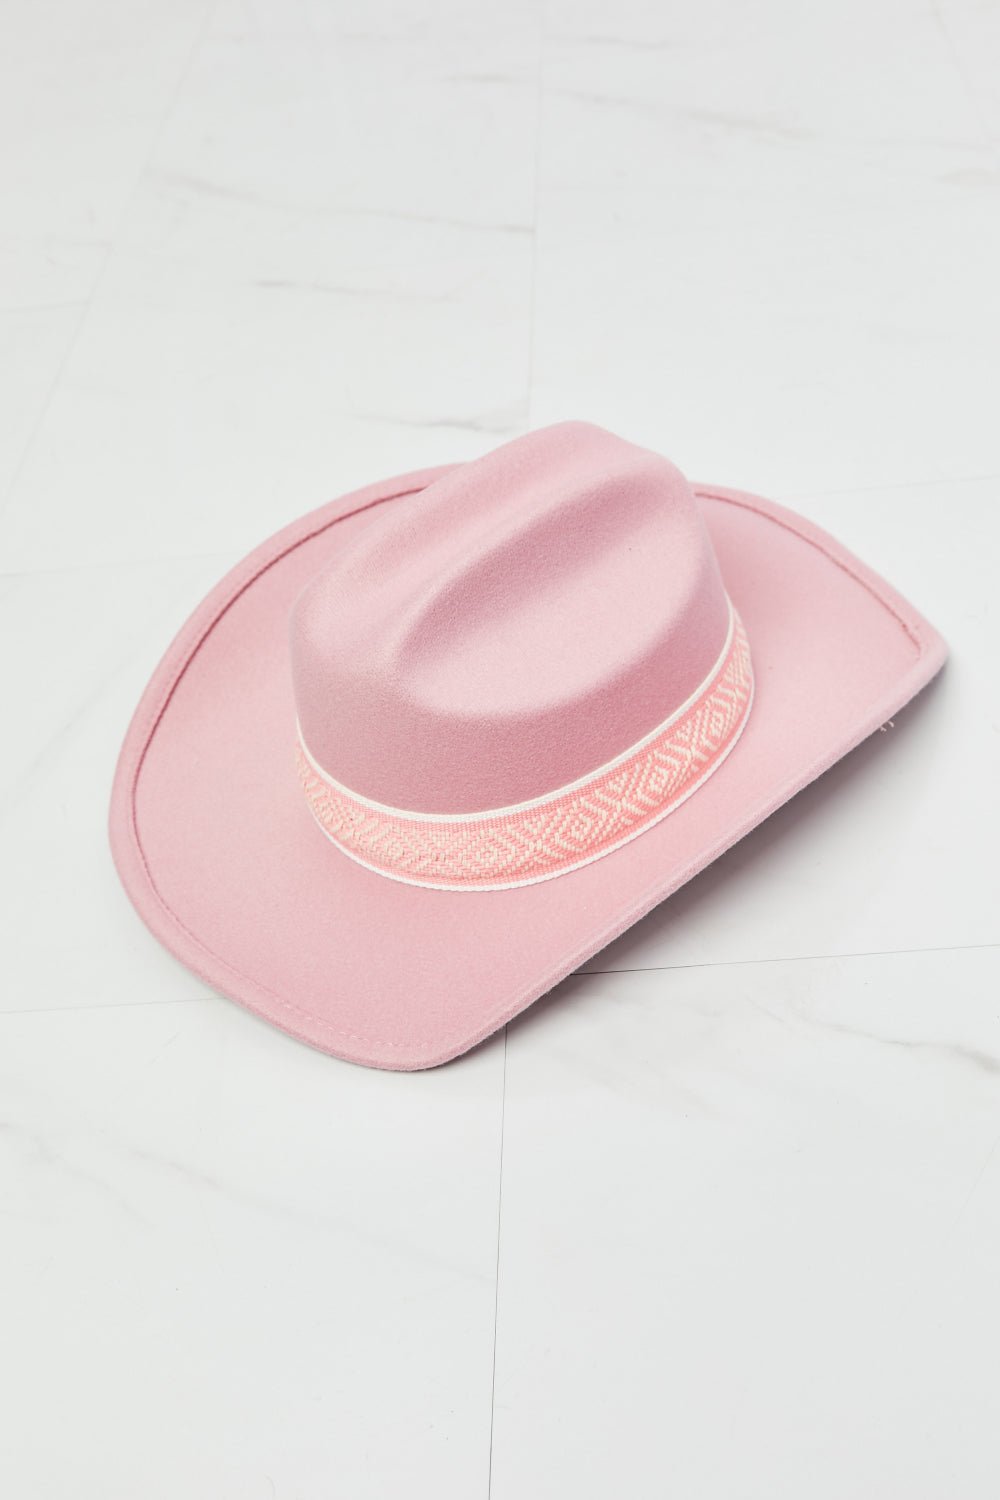 Cowgirl Hat in Blush PinkCowboy HatFame